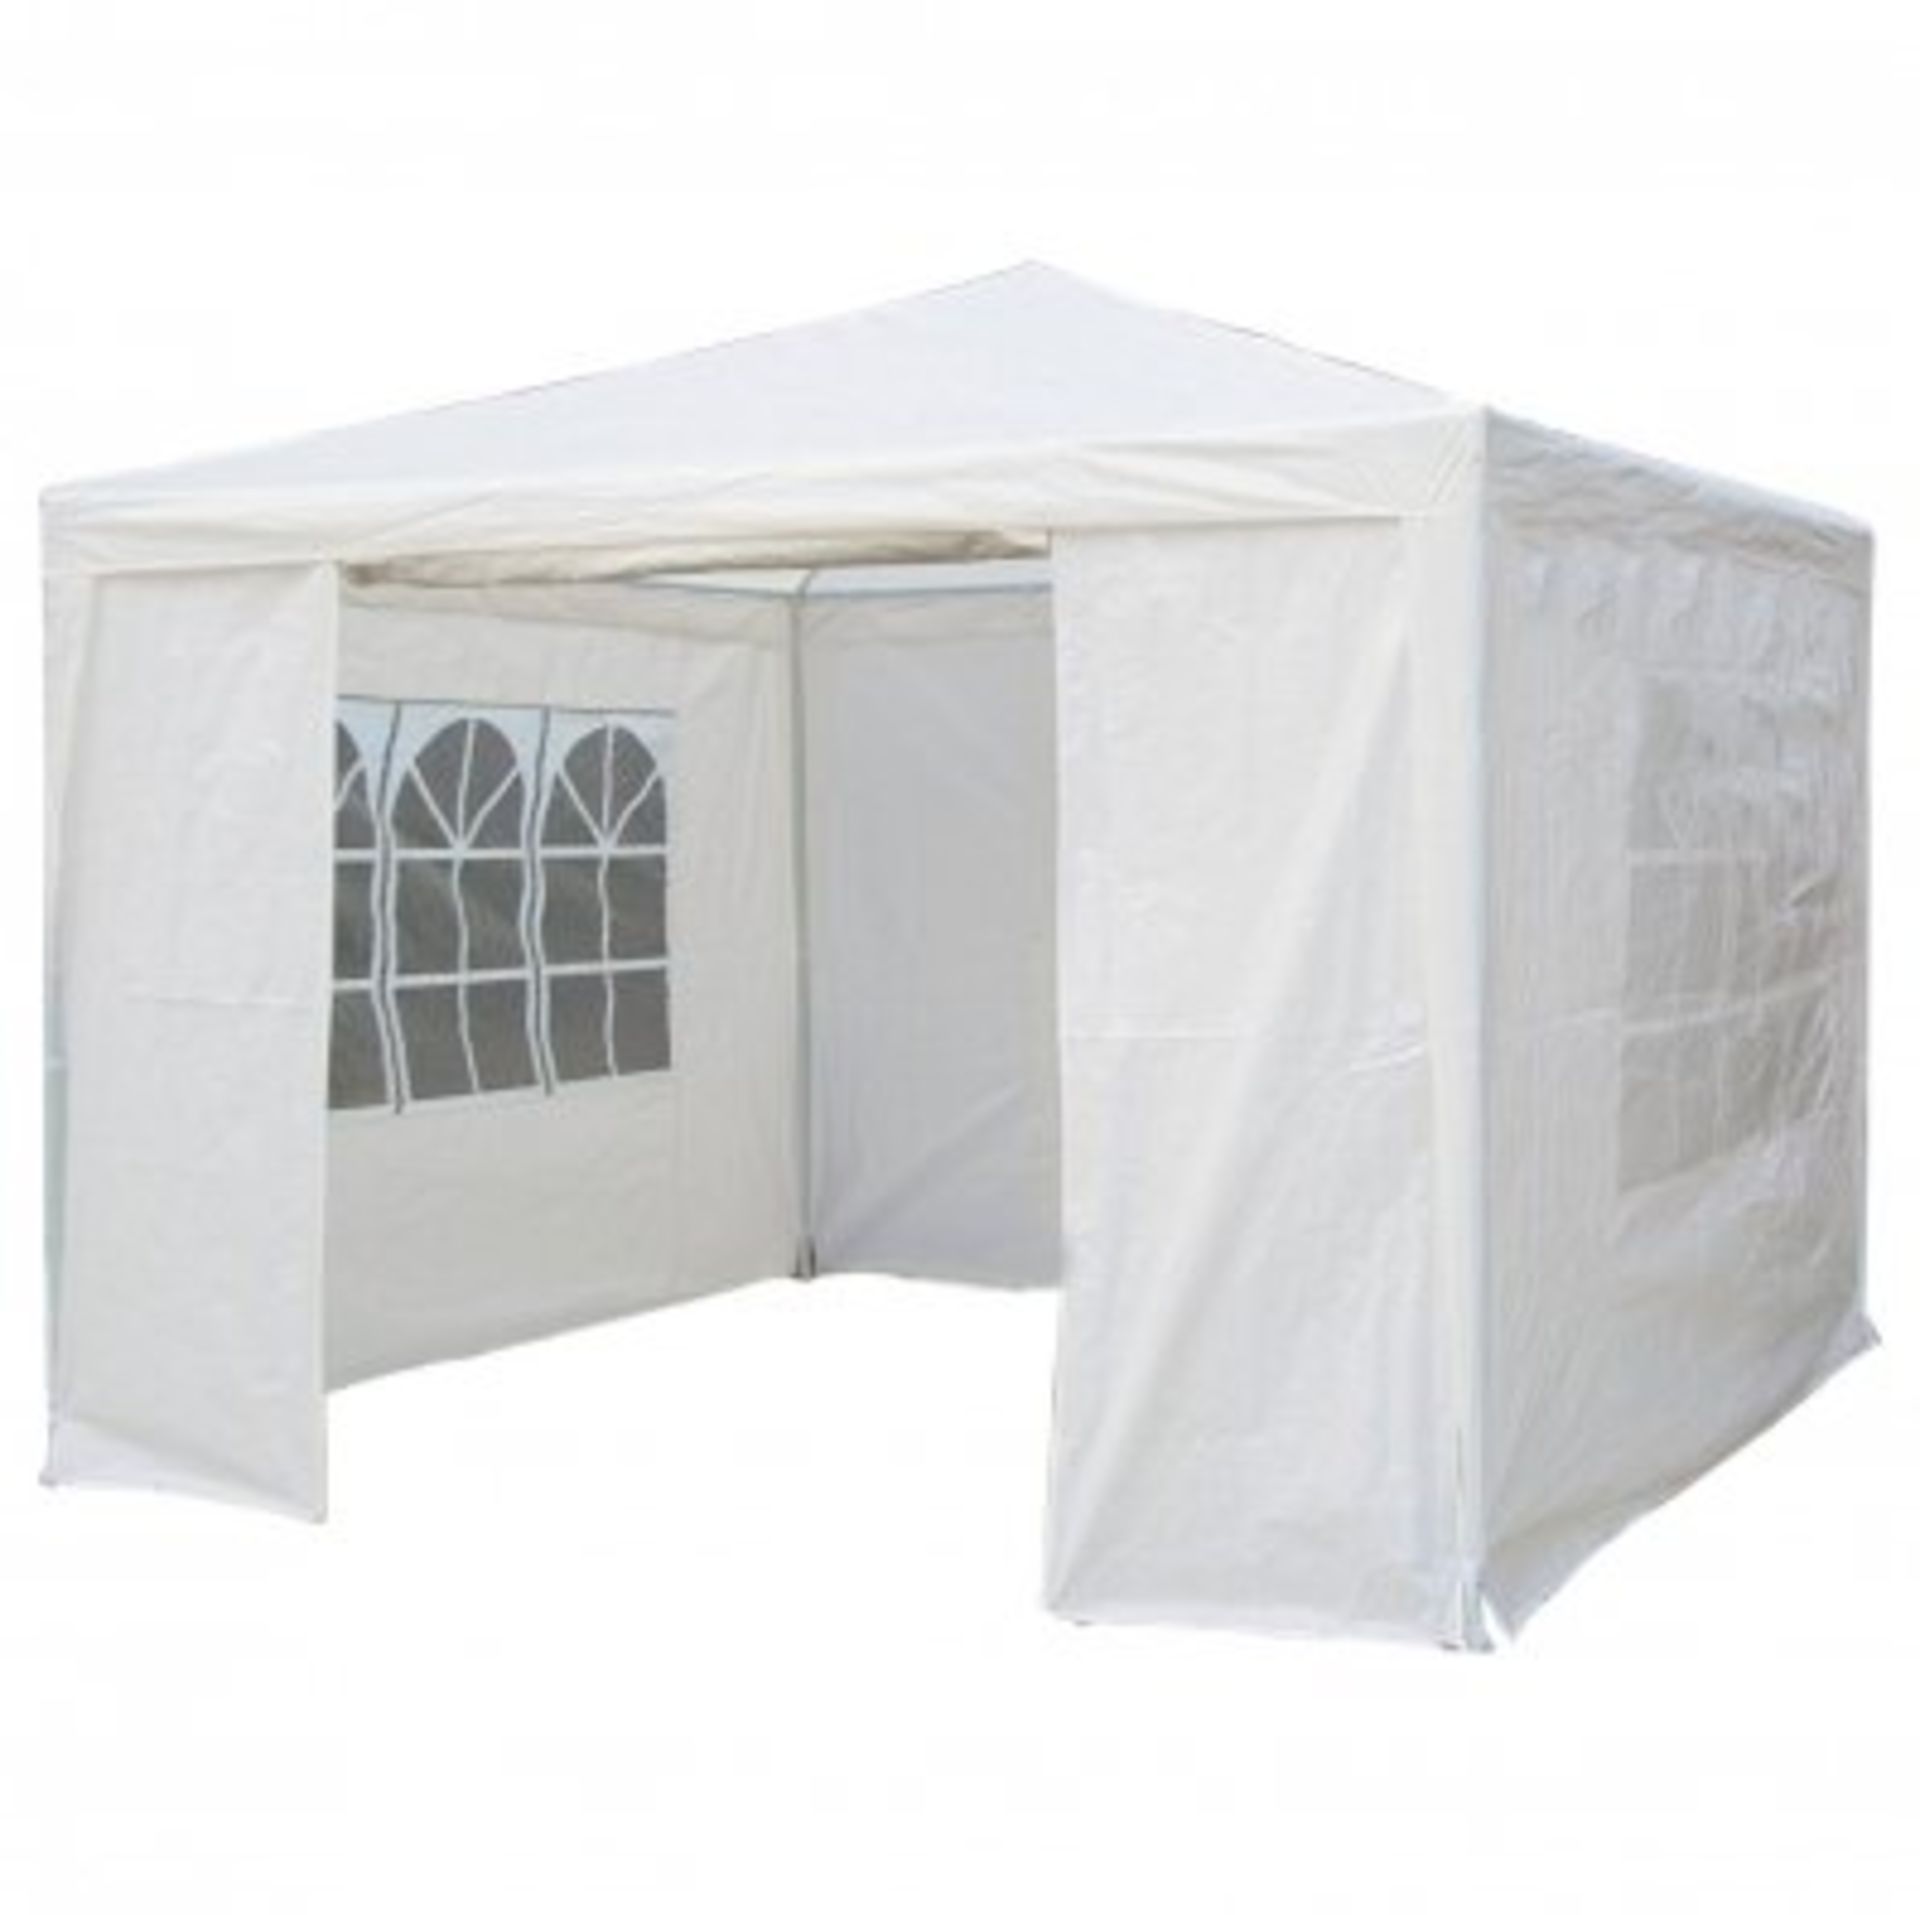 (RU54) 3m x 3m White Waterproof Garden Gazebo Marquee Awning Tent The 3m gazebo is ideal f...